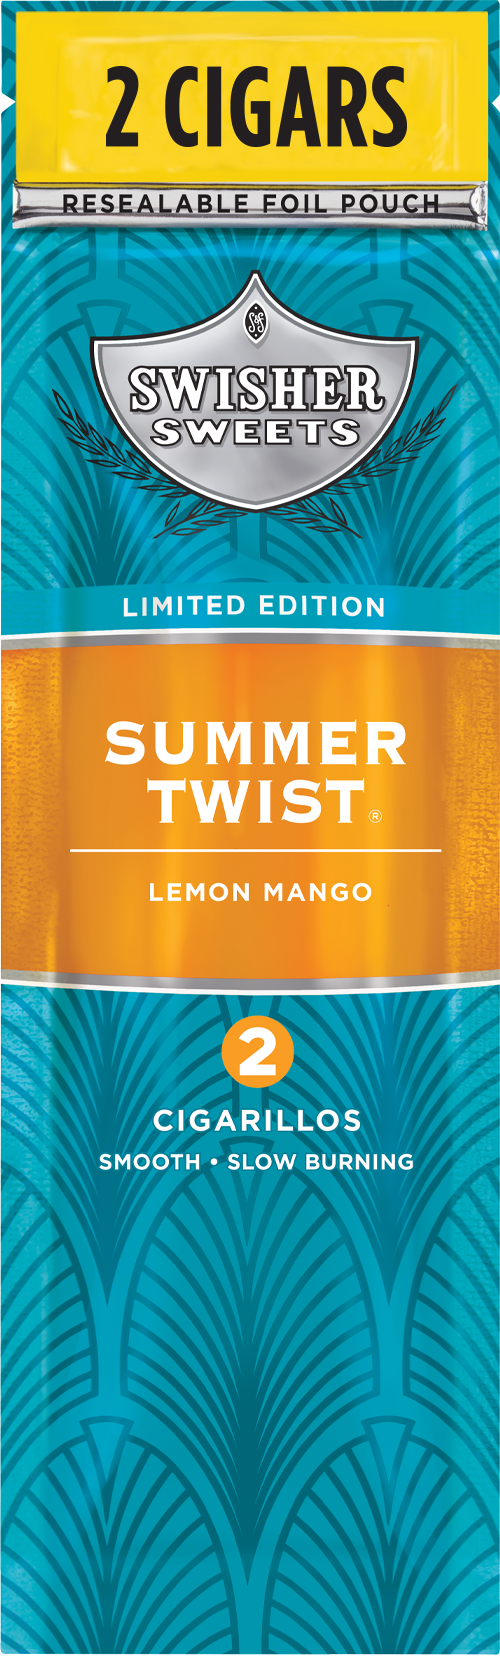 Limited Edition - Summer Twist